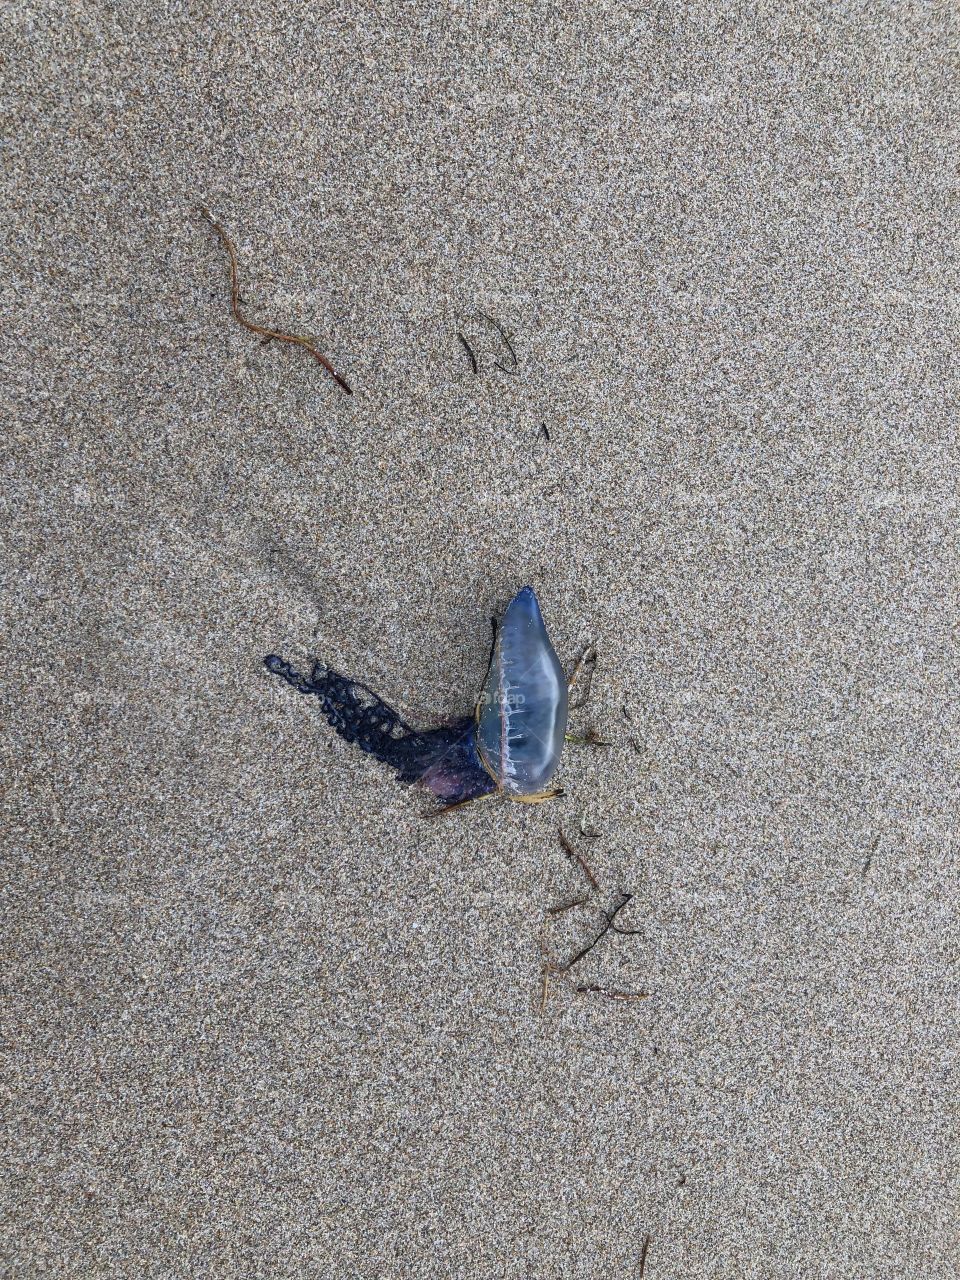 Blue Jellyfish on Hillsboro Beach